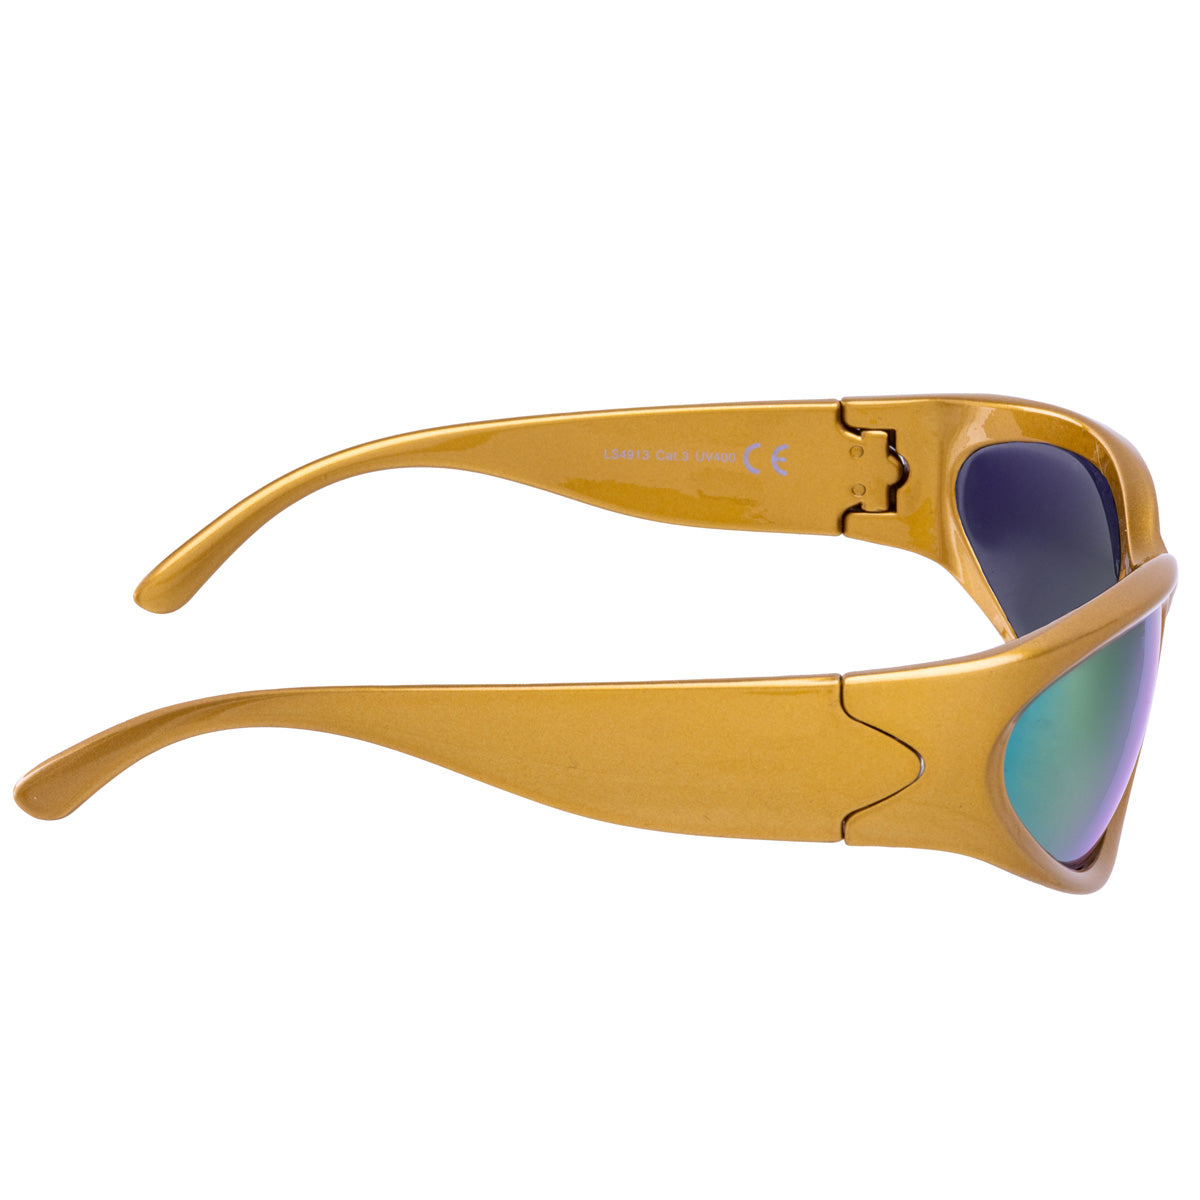 Sport sunglasses sport sunglasses